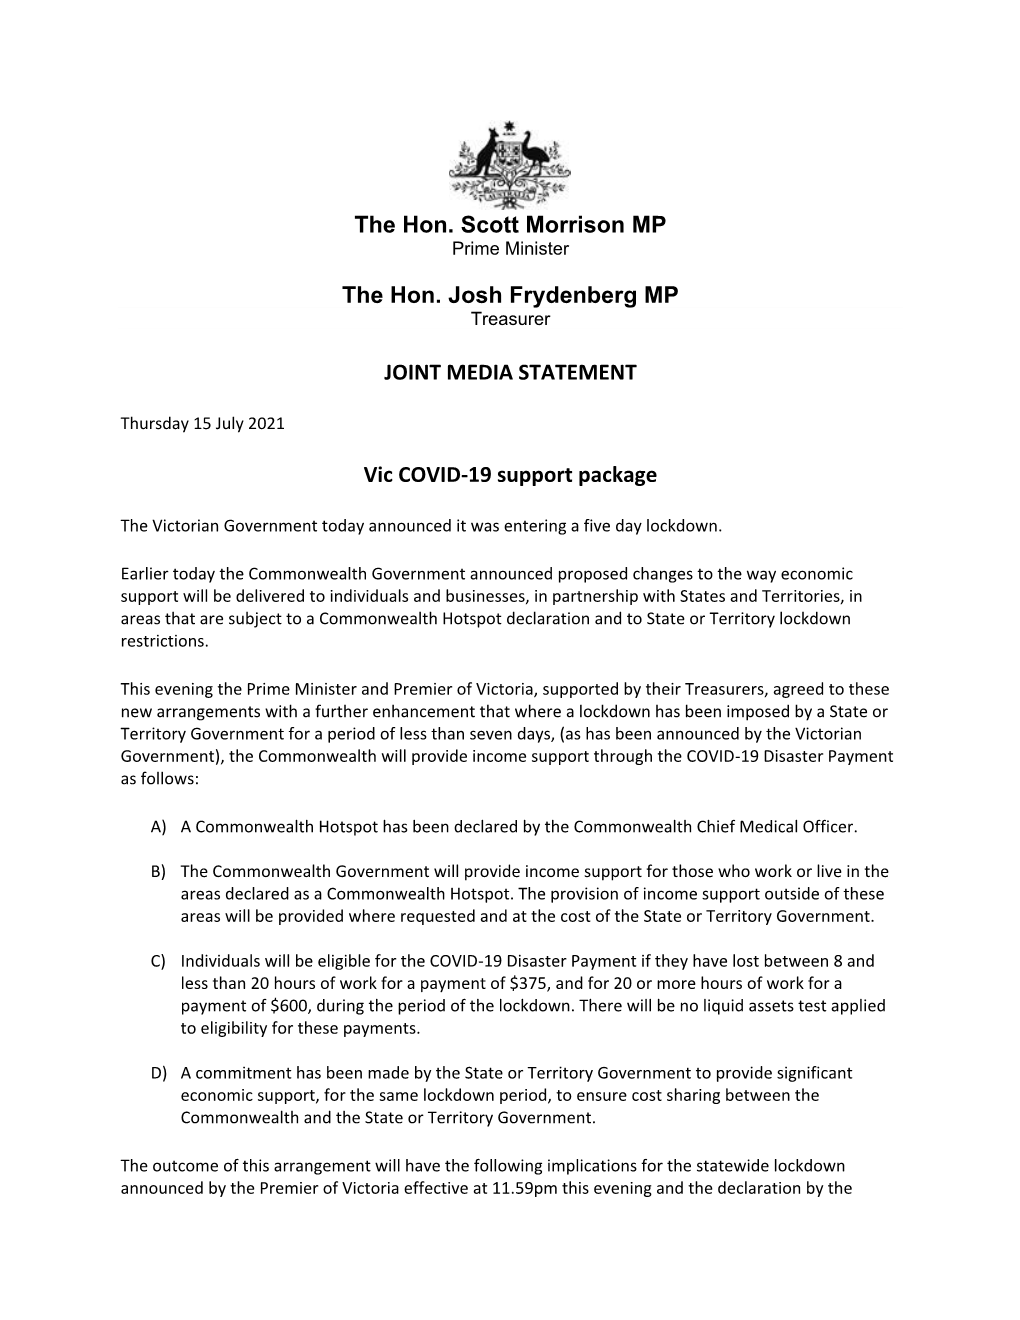 The Hon. Scott Morrison MP the Hon. Josh Frydenberg MP JOINT MEDIA STATEMENT Vic COVID-19 Support Package